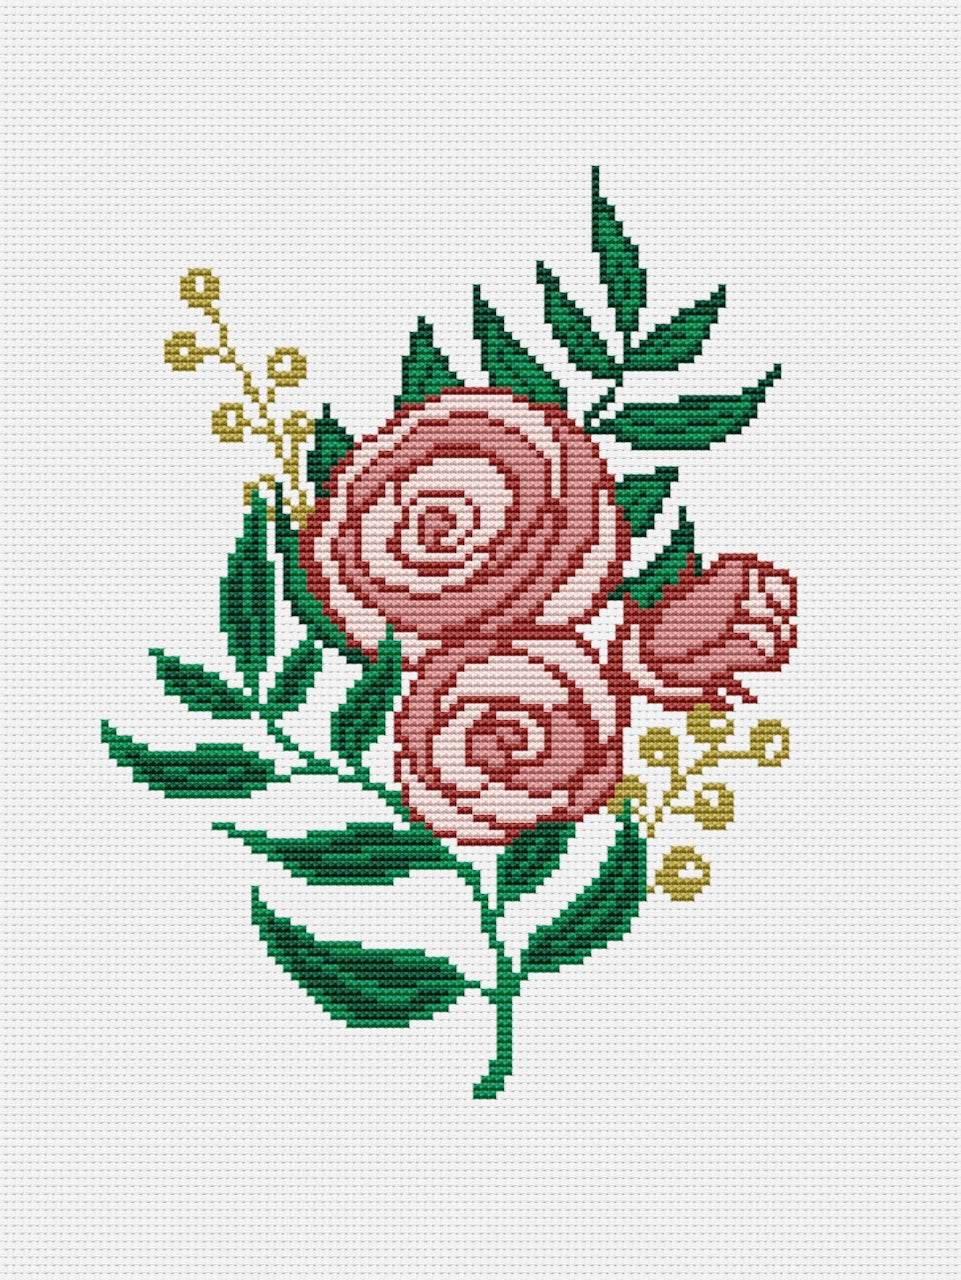 Garden roses 2 - cross stitch pattern